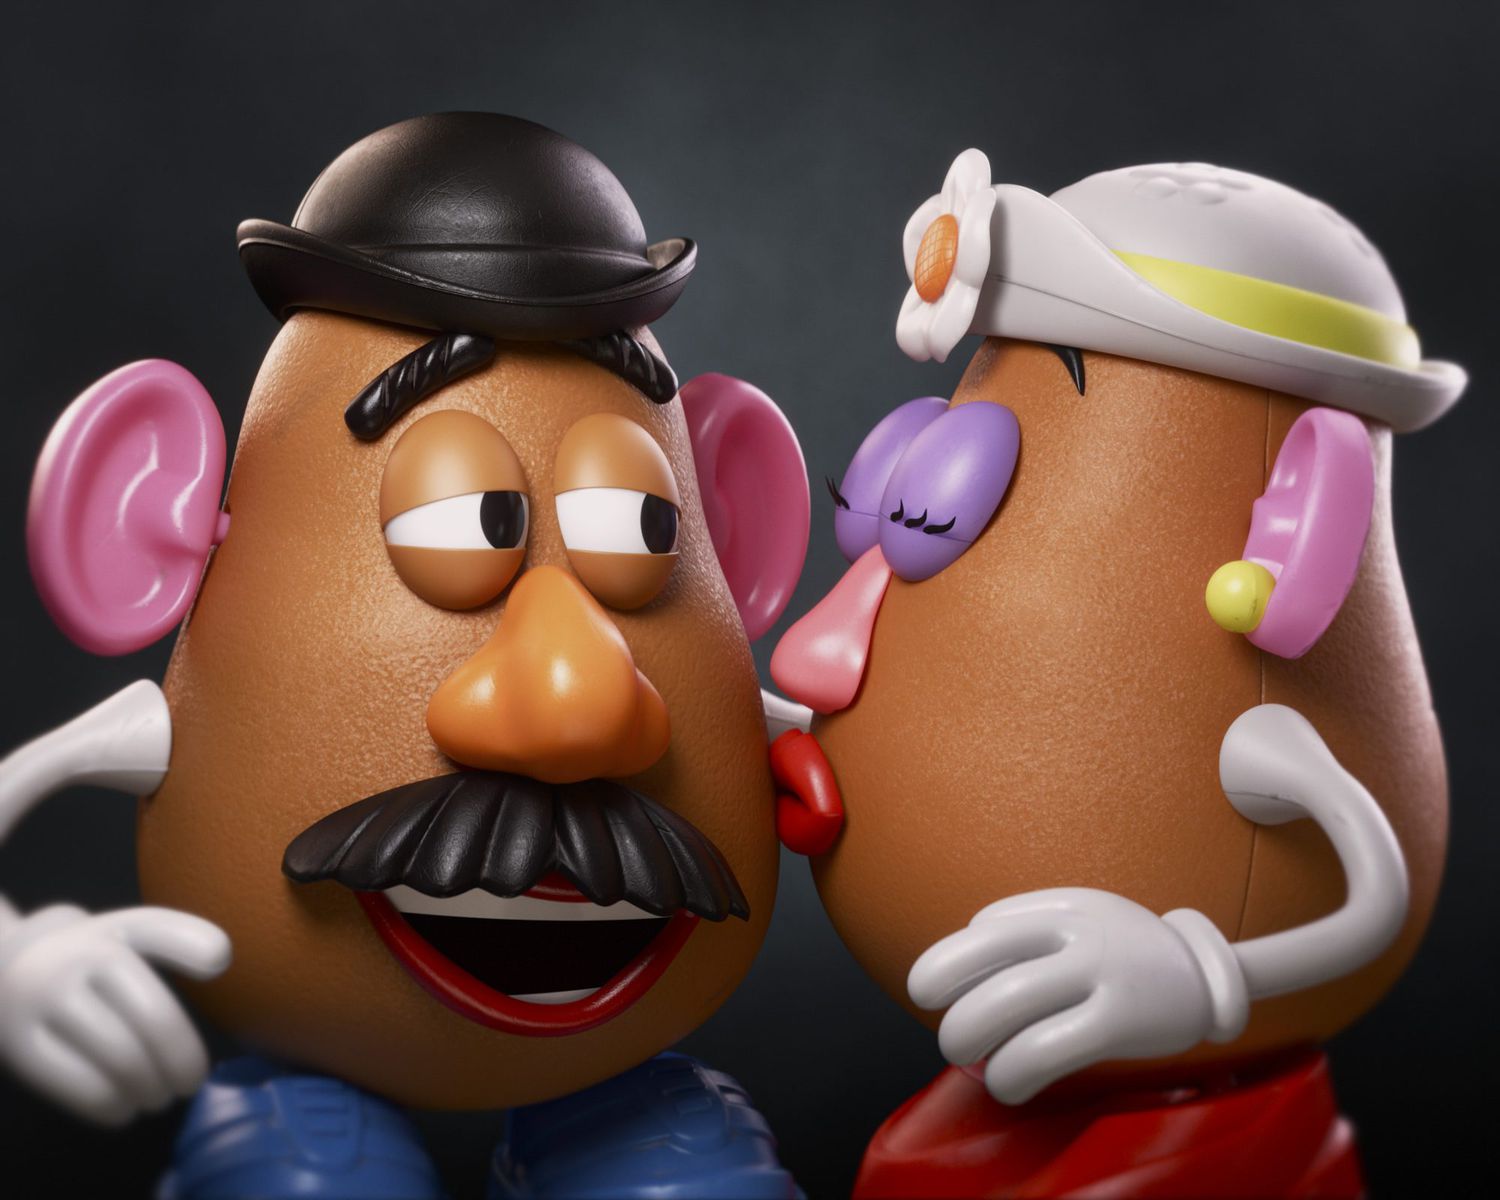 Toy Story 4 Mr. Potato Head and Mrs. Potato Head CR: Disney/Pixar